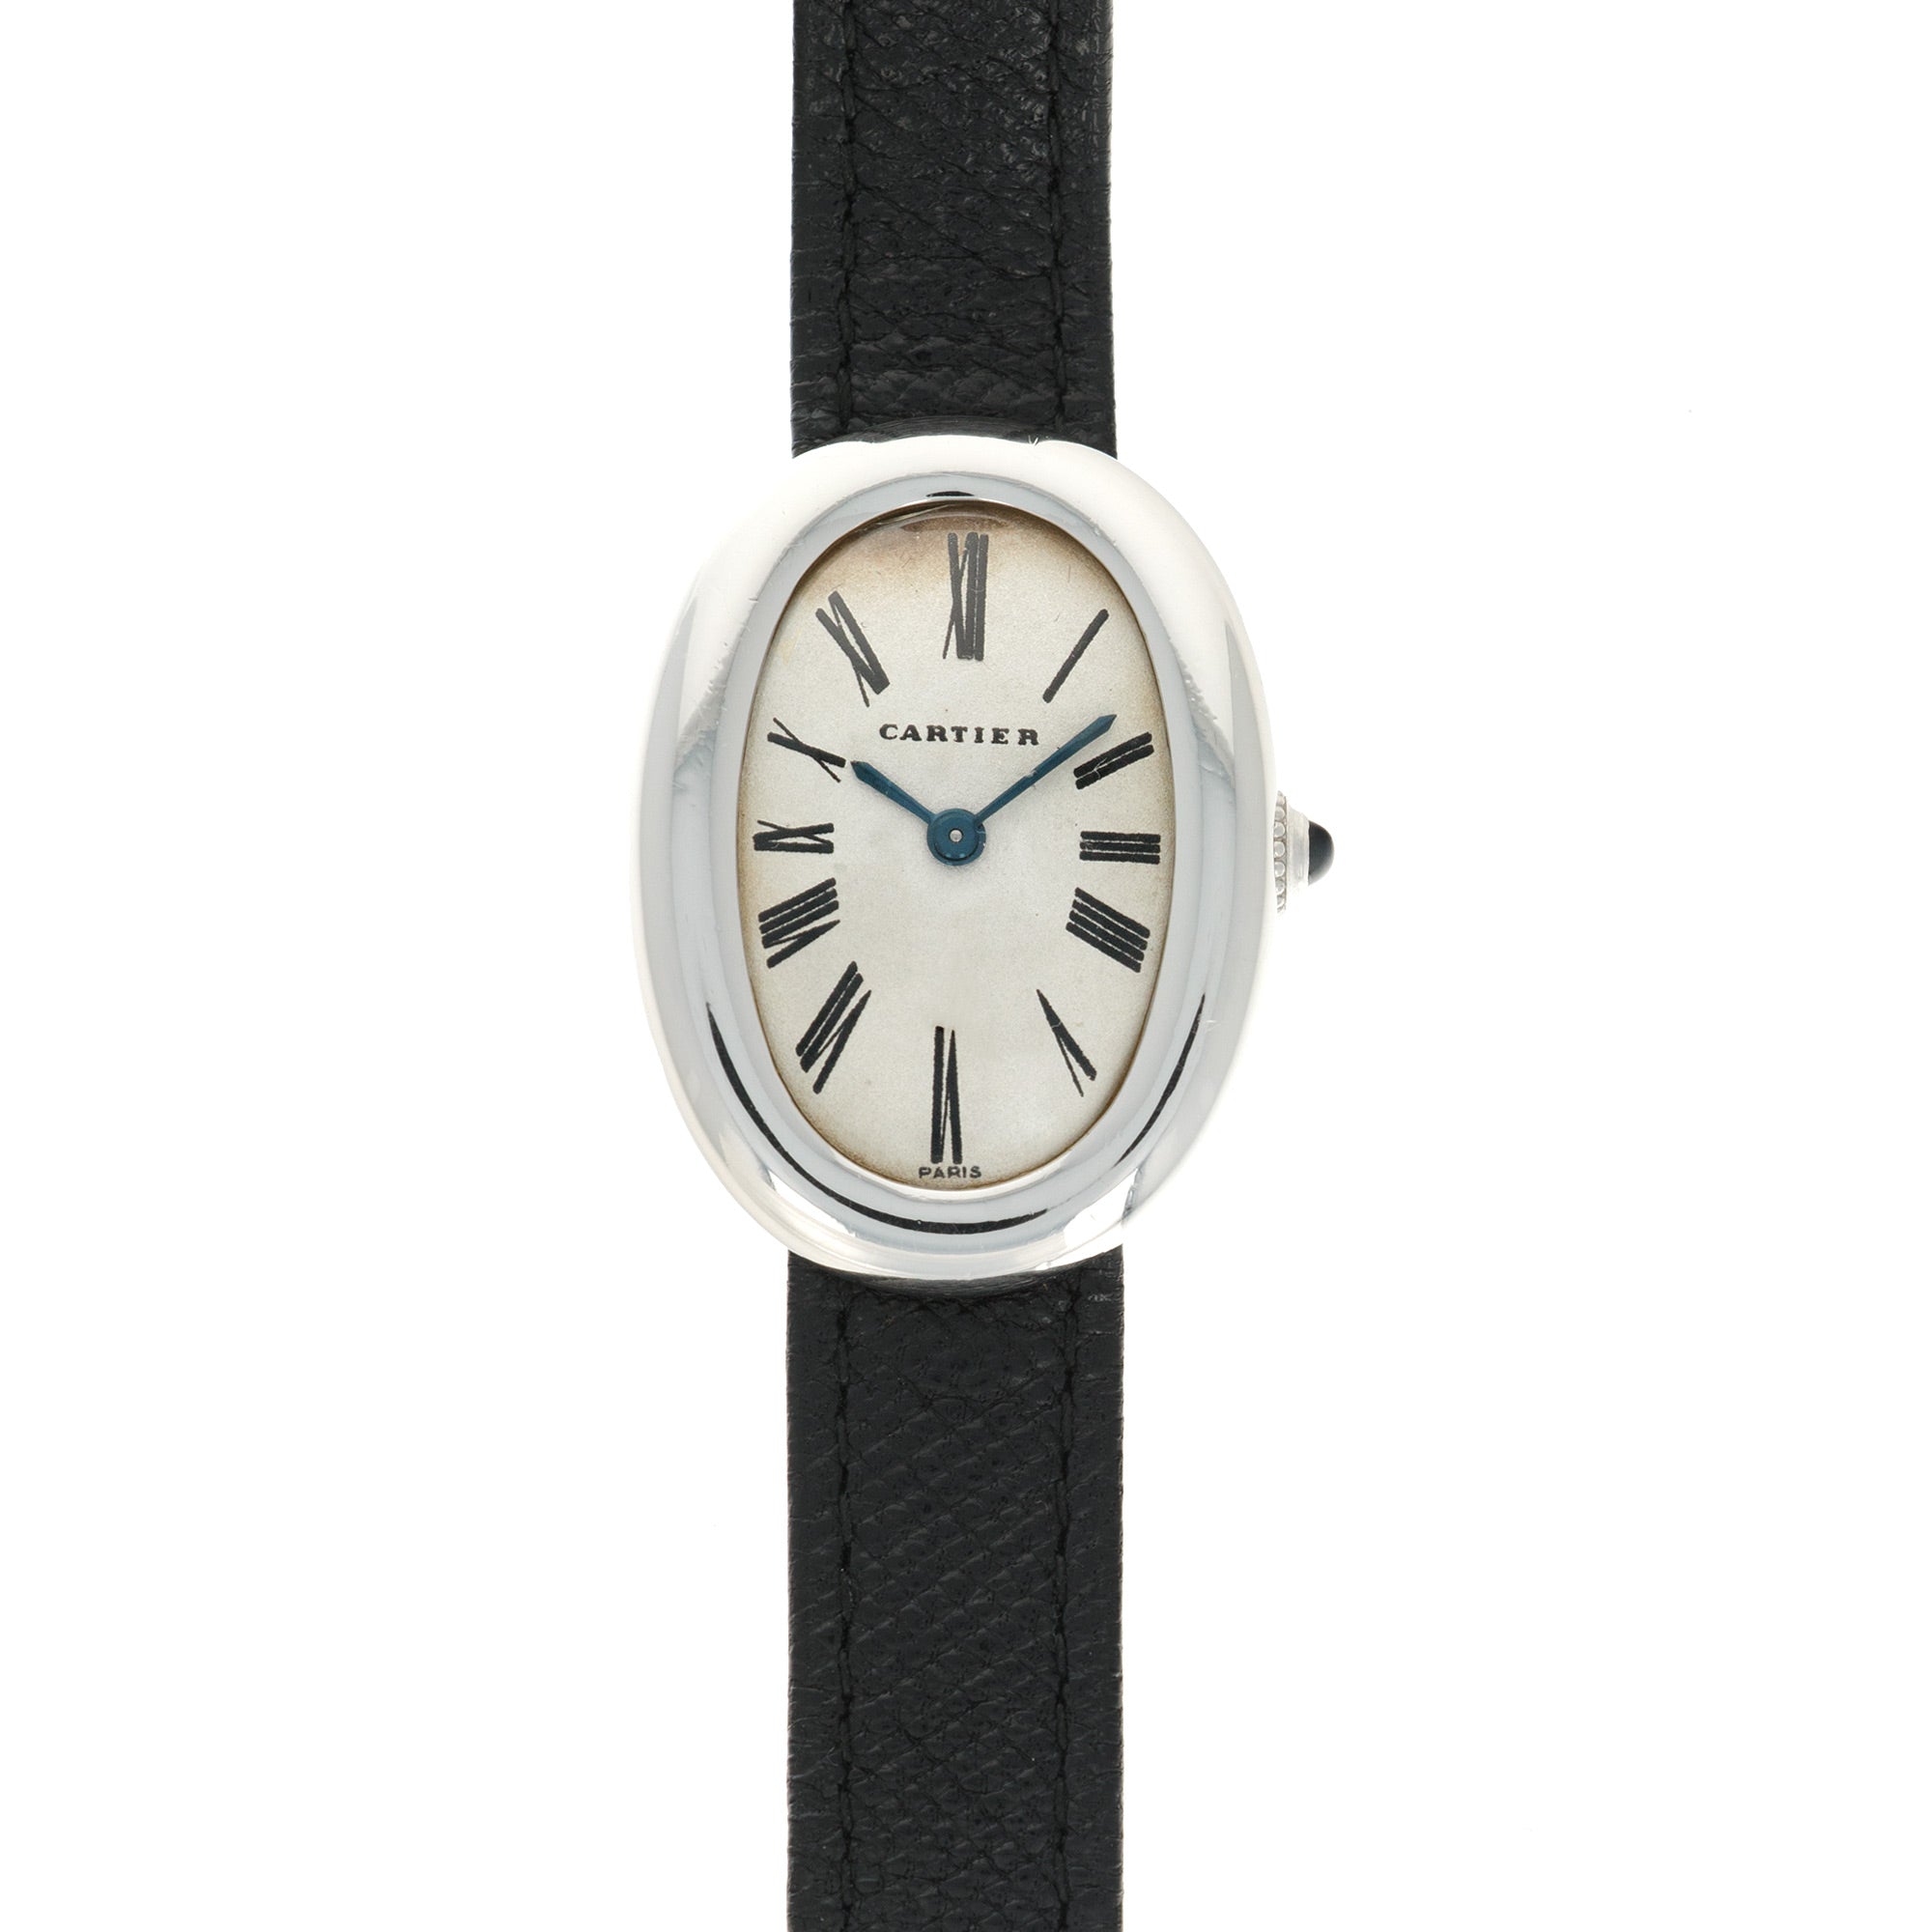 Cartier - Cartier Platinum Baignoire Watch, 1960 - The Keystone Watches